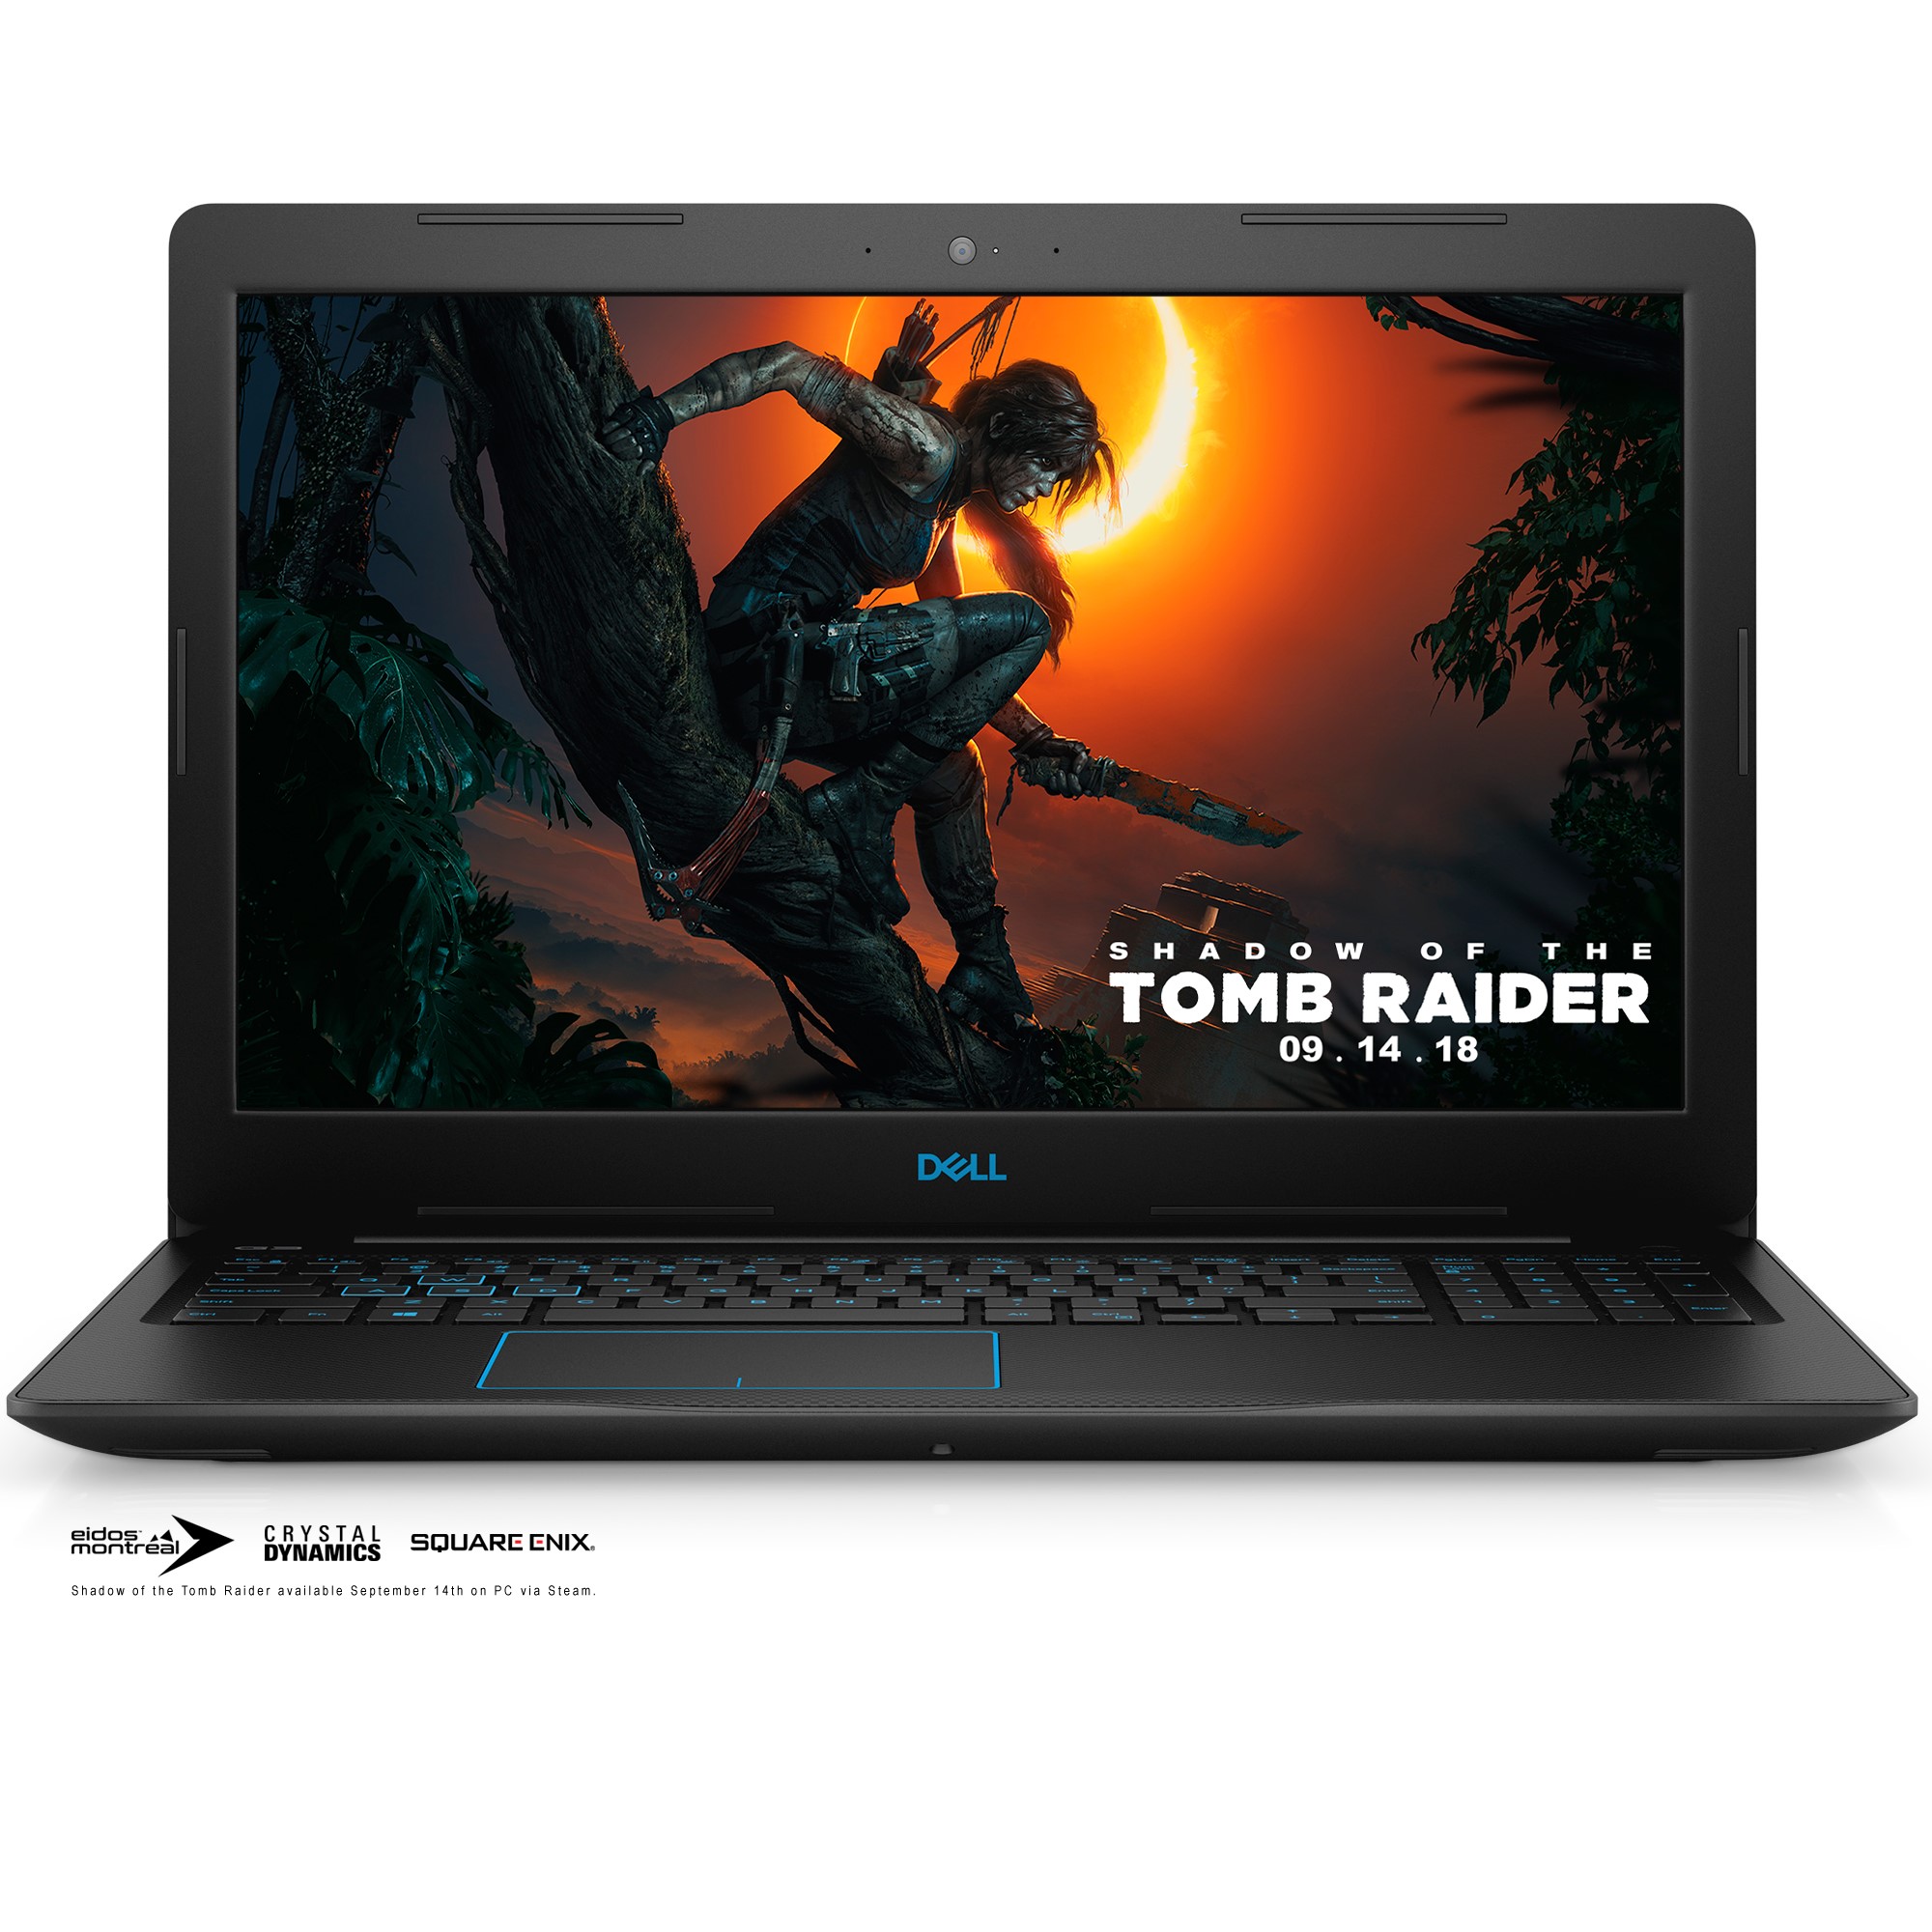 Dell G3 Gaming Laptop 15.6" Full HD, Intel Core i5-8300H, NVIDIA GeForce GTX 1050 4GB, 1TB HDD + 16GB Intel Optane Storage, 8GB RAM, Windows 10 - Black - G3579-5245BLK - image 1 of 6